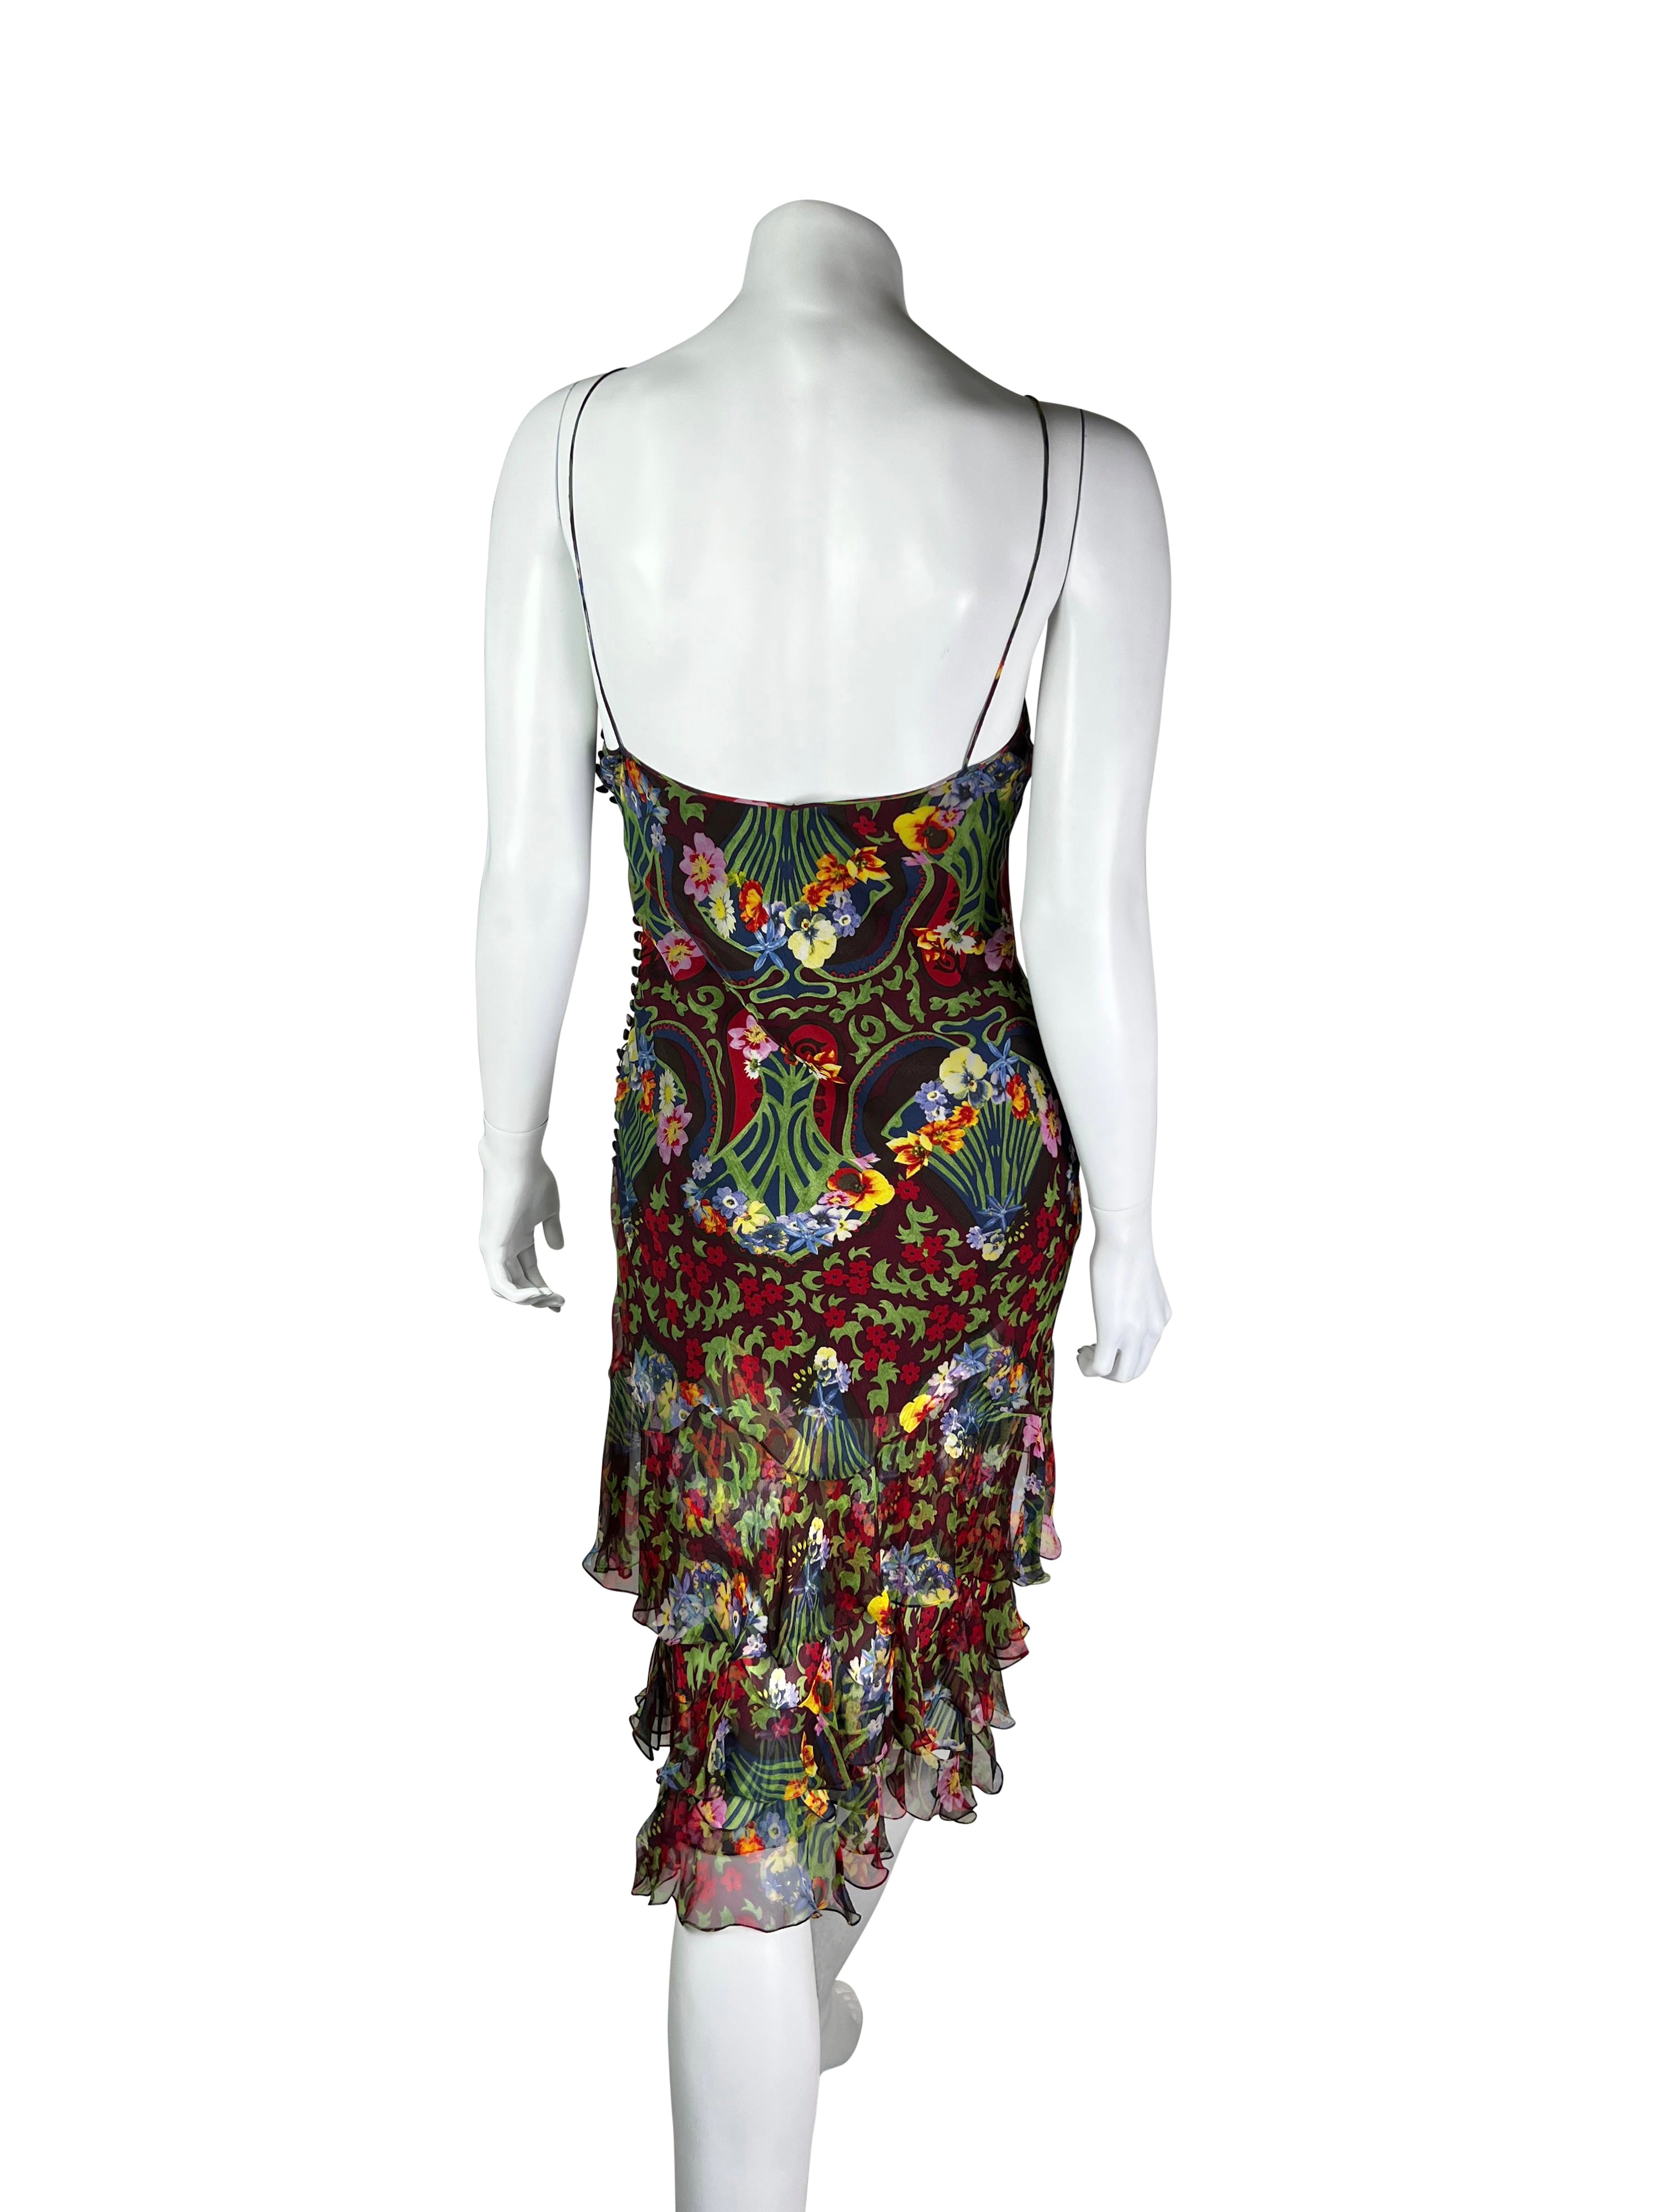 Dior by John Galliano Fall 2005 Silk Ruffle Dress